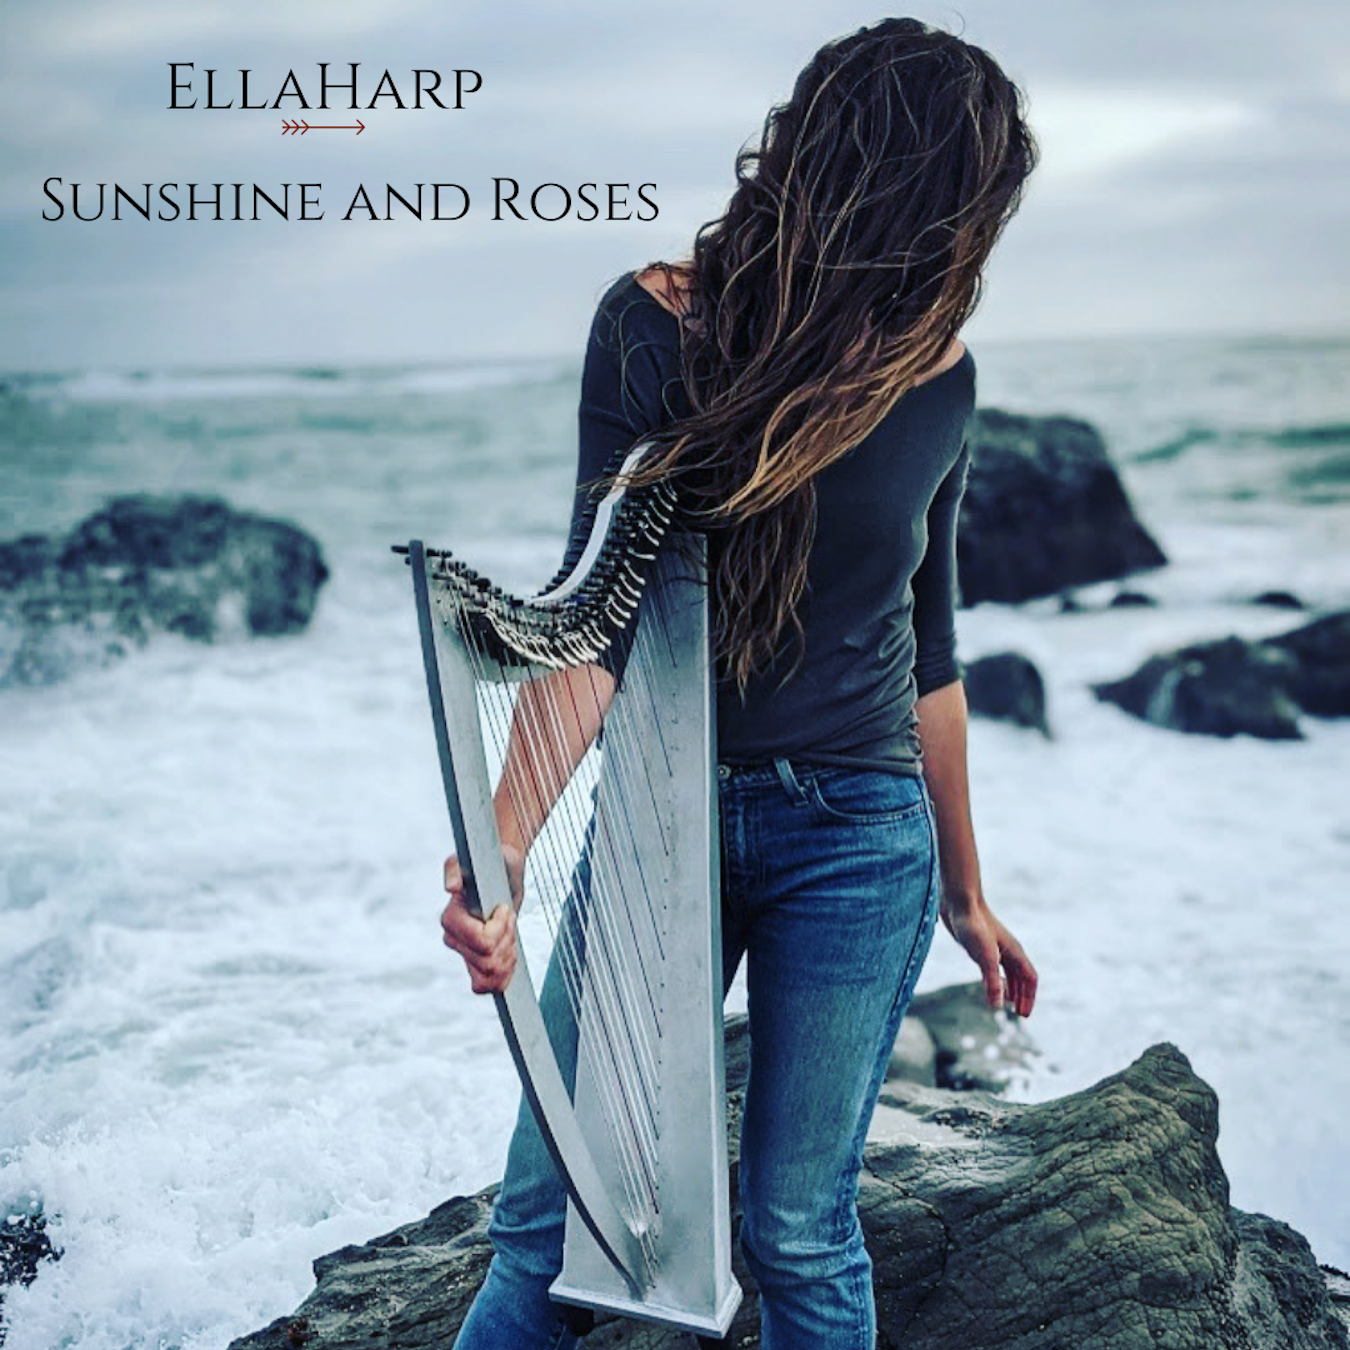 EllaHarp | "Sunshine and Roses” | Review